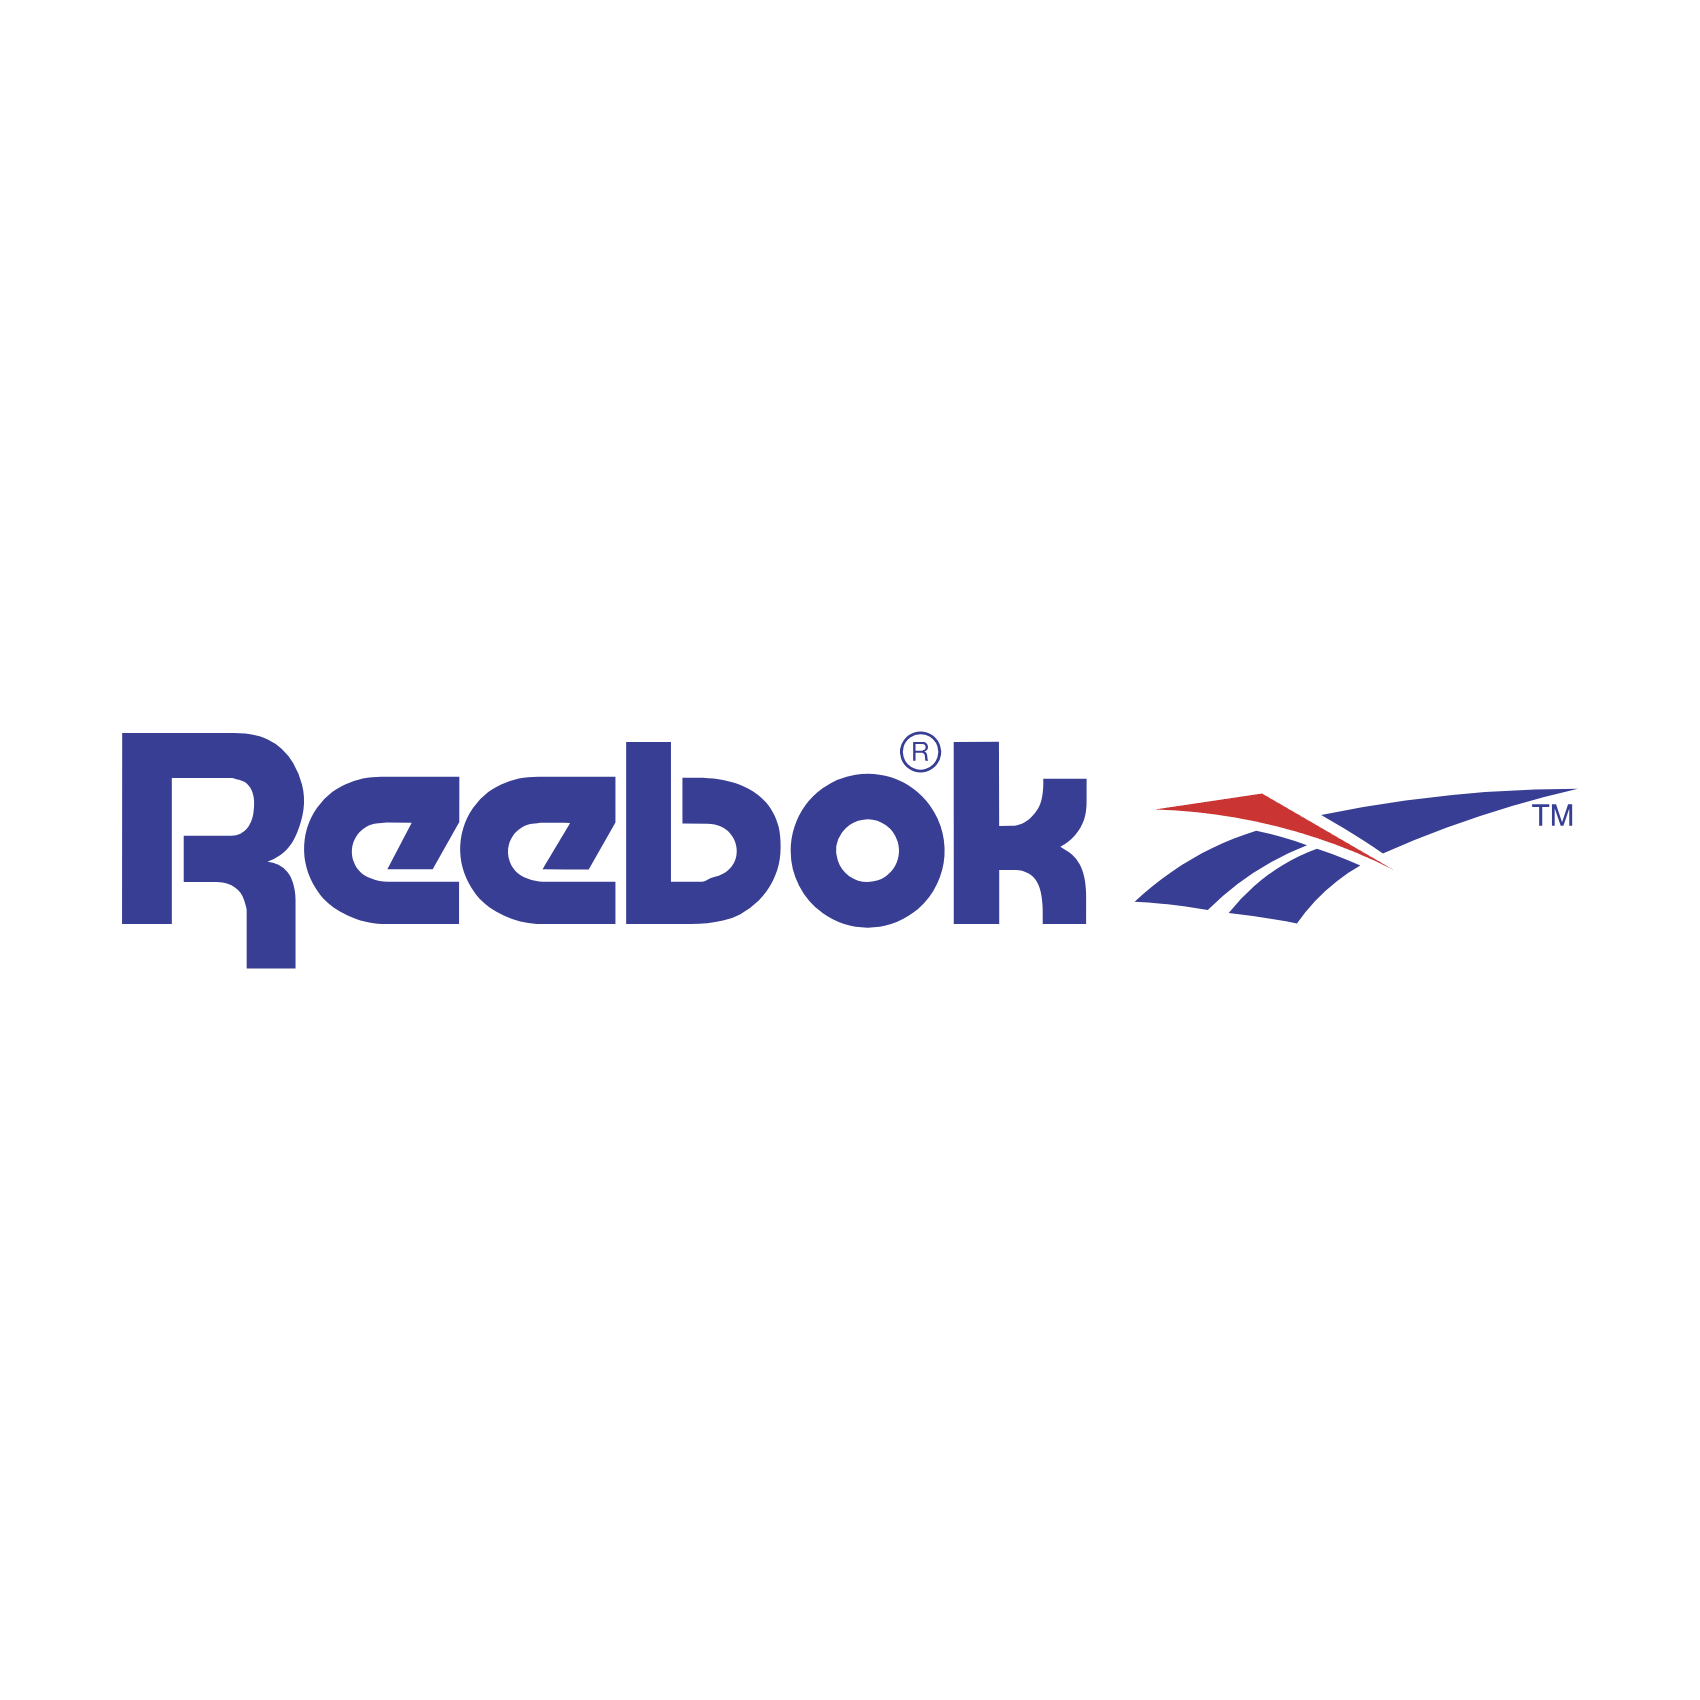 Reebok logo, Vector Logo of Reebok brand free download (eps, ai, png, cdr)  formats